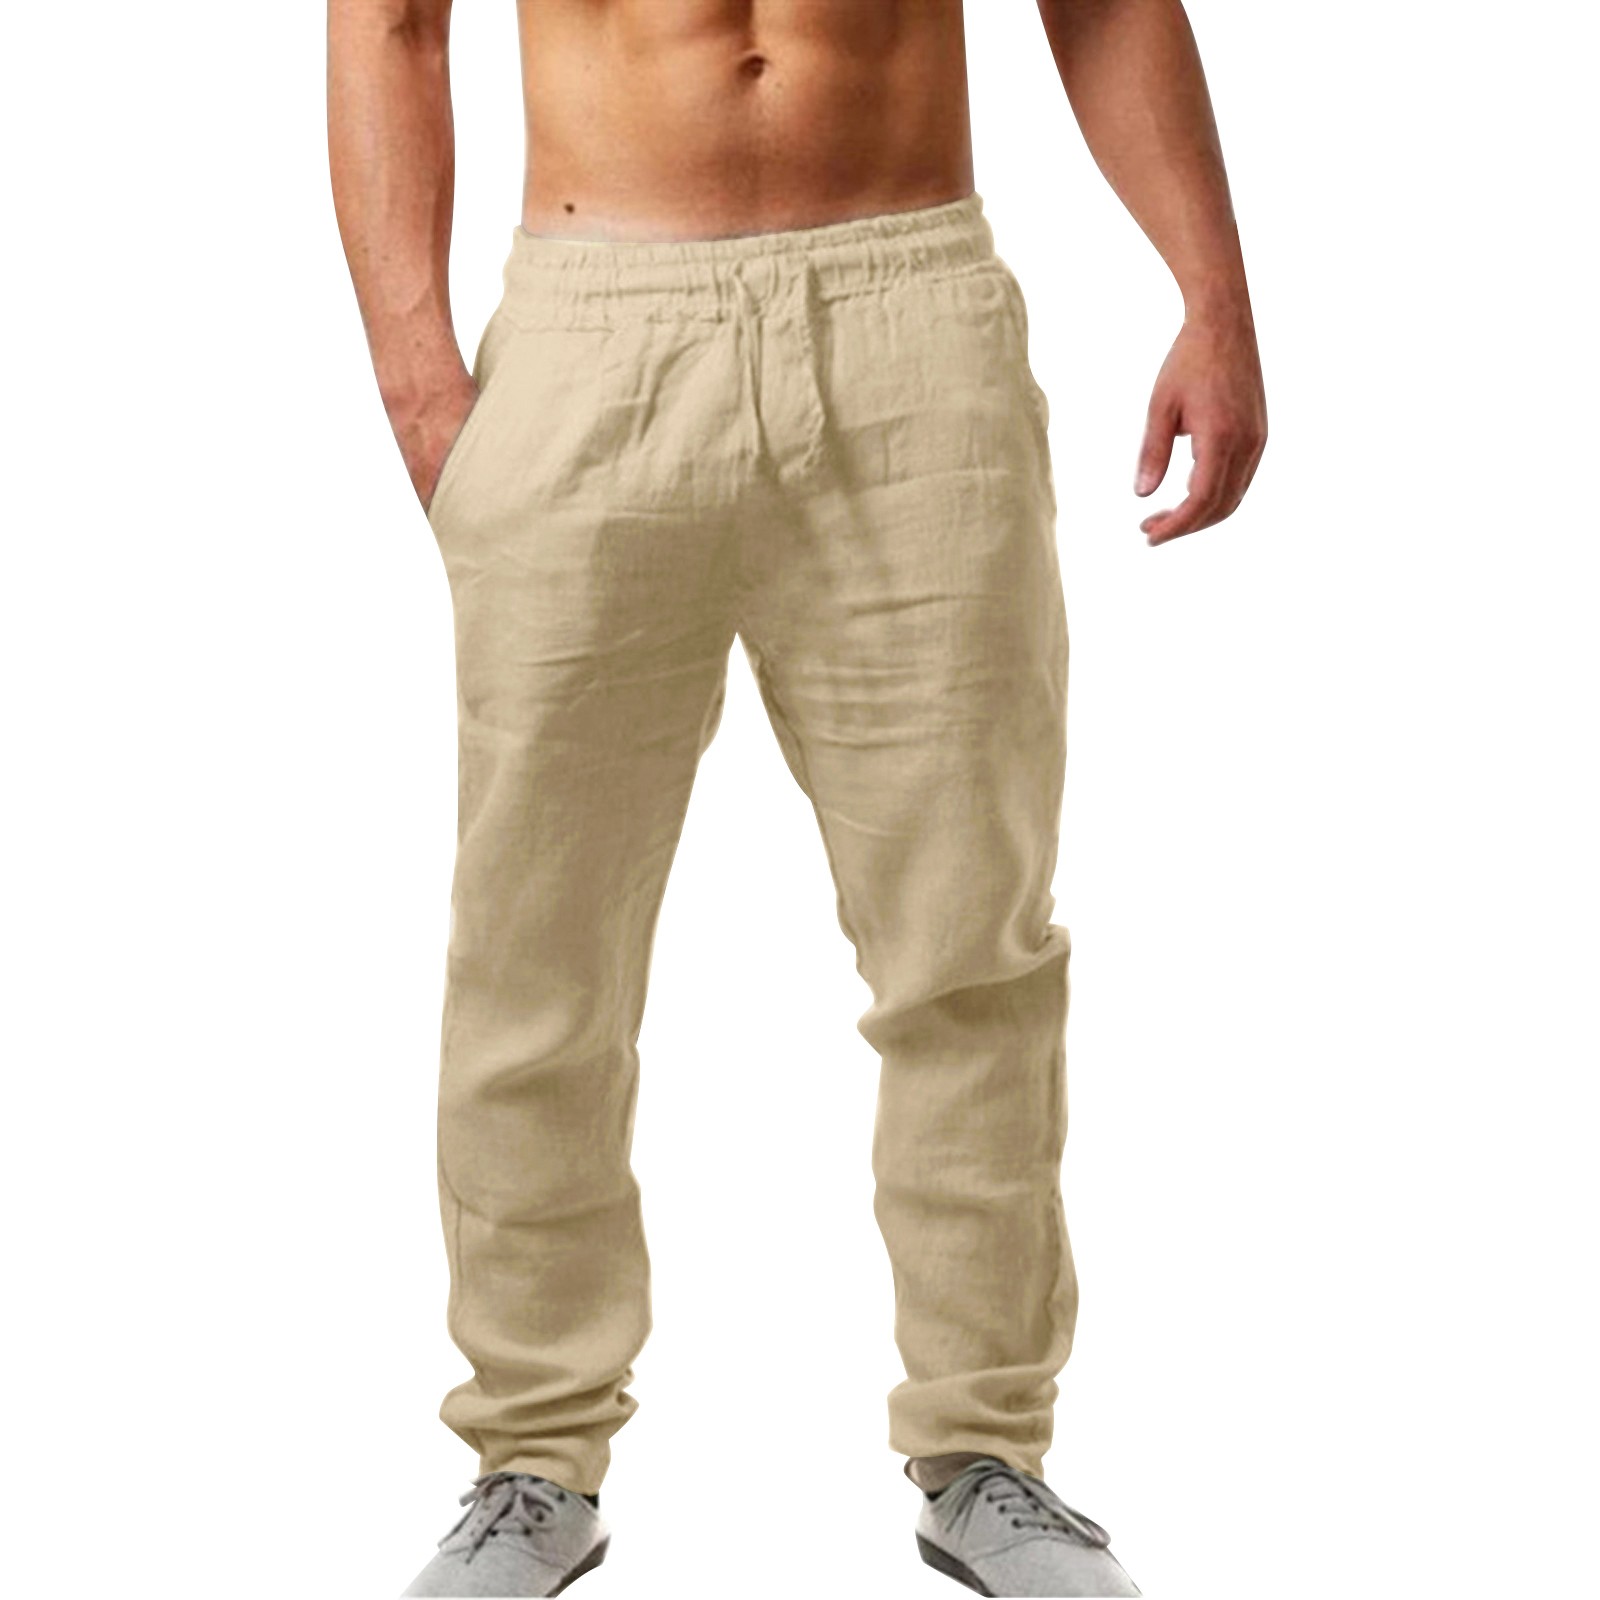 ASFGIMUJ Sweatpants For Men Big And Tall Elastic Pants Solid Color ...